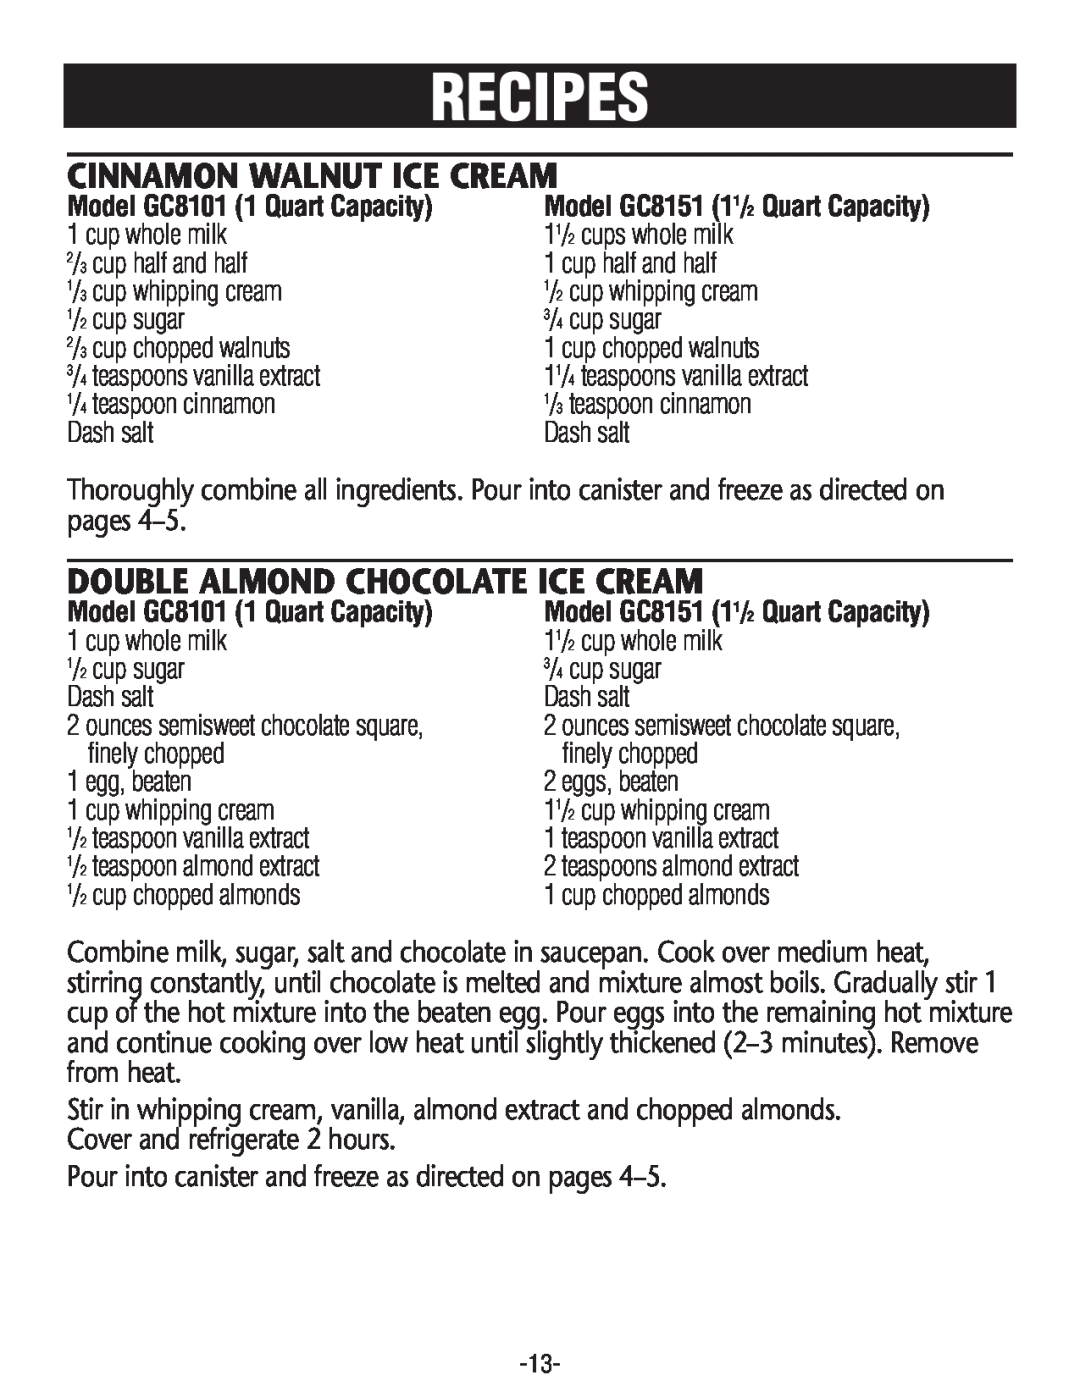 Rival GC8151 manual Cinnamon Walnut Ice Cream, Double Almond Chocolate Ice Cream, Recipes, Model GC81011 Quart Capacity 